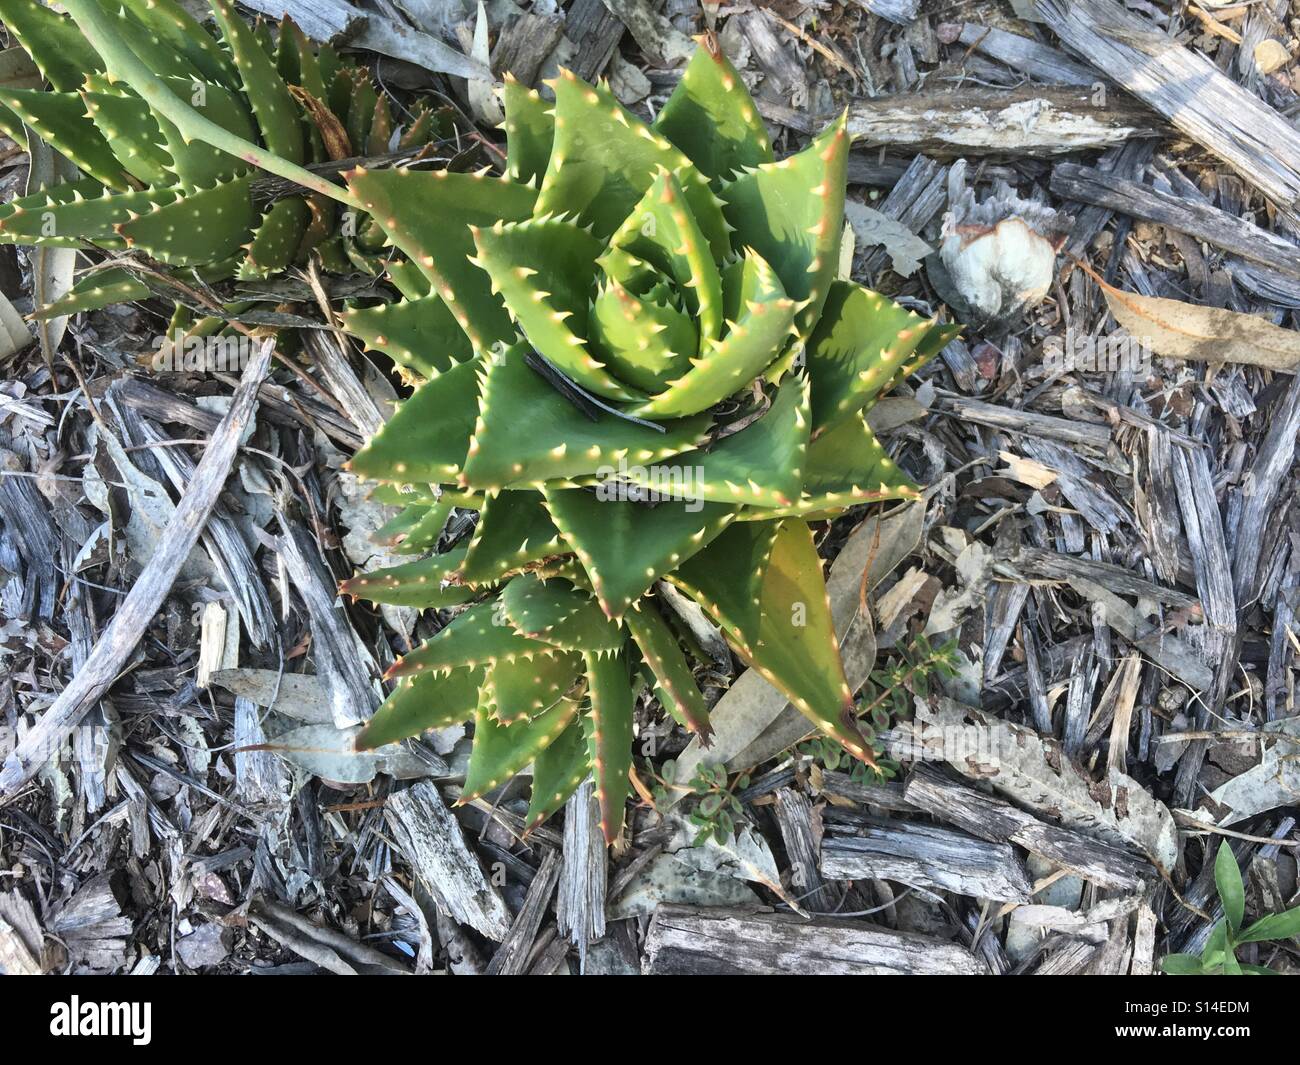 Trockenheit resistente Pflanzen Stockfotografie - Alamy